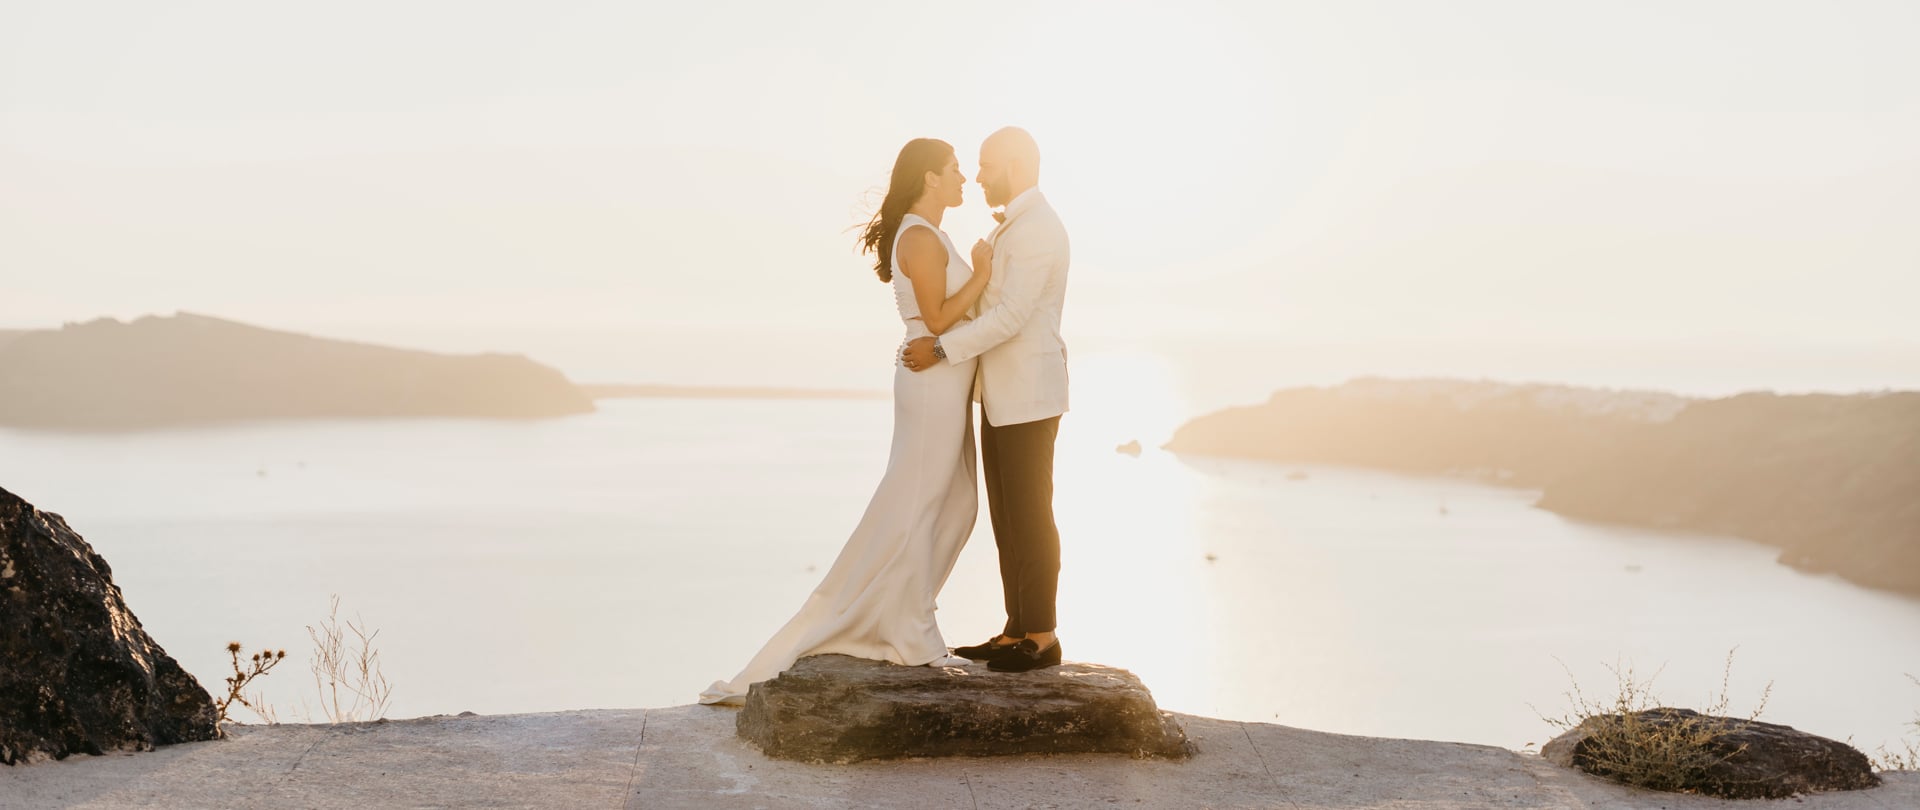 Sarah & Michael Wedding Video Filmed at Santorini, Greece